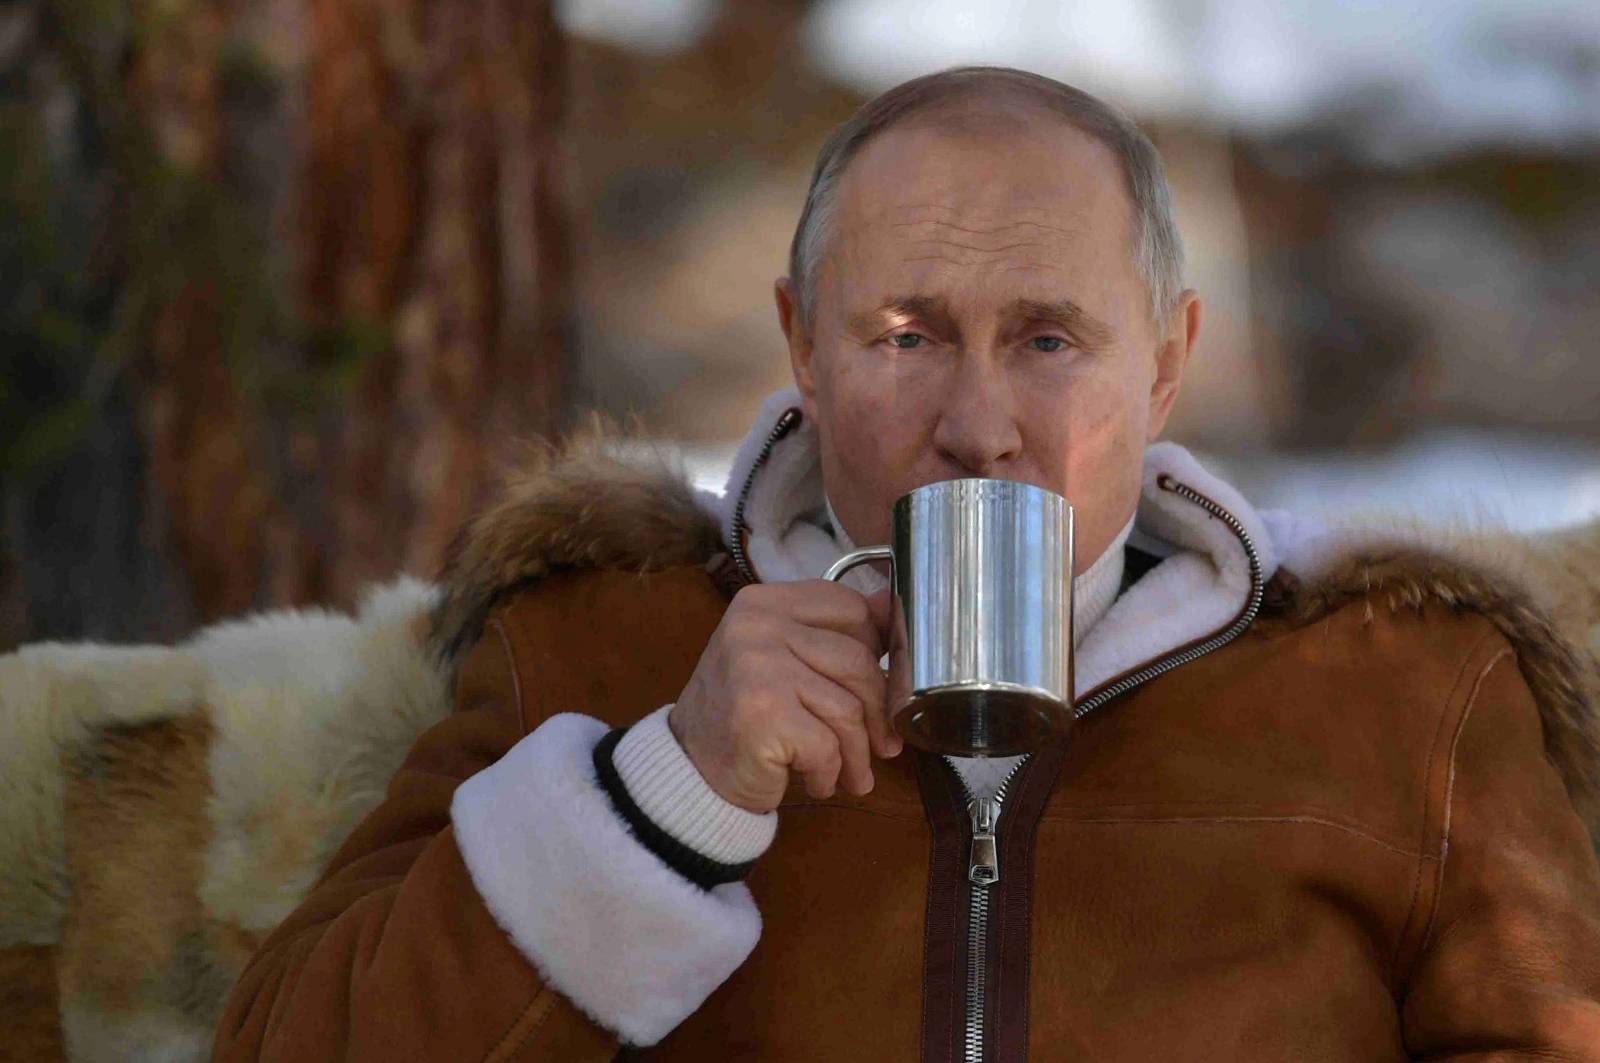 Russian President Putin takes holiday in Siberian taiga